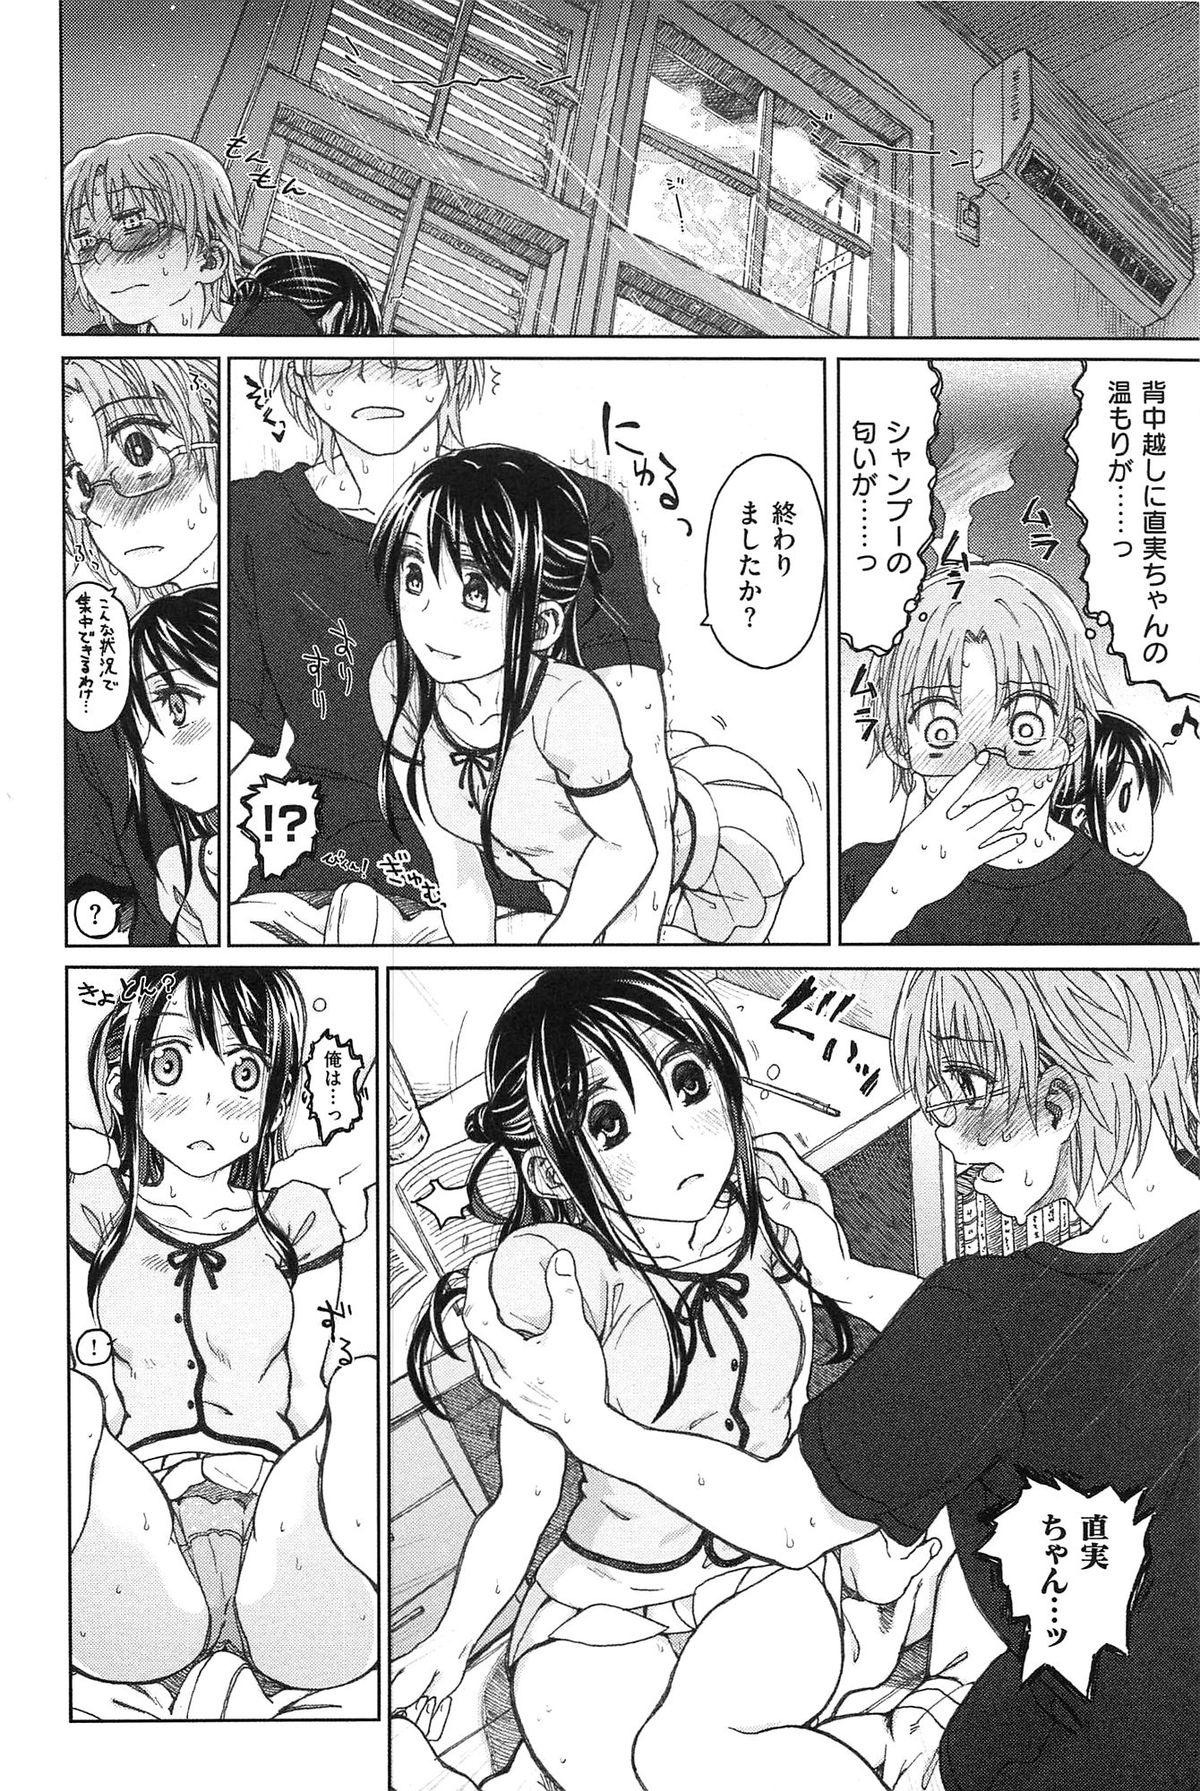 [Dagashi] Junketsu no Owaru Hibi (Beautiful Days of Losing Virginity) … (WANI MAGAZINE COMICS SPECIAL) 8